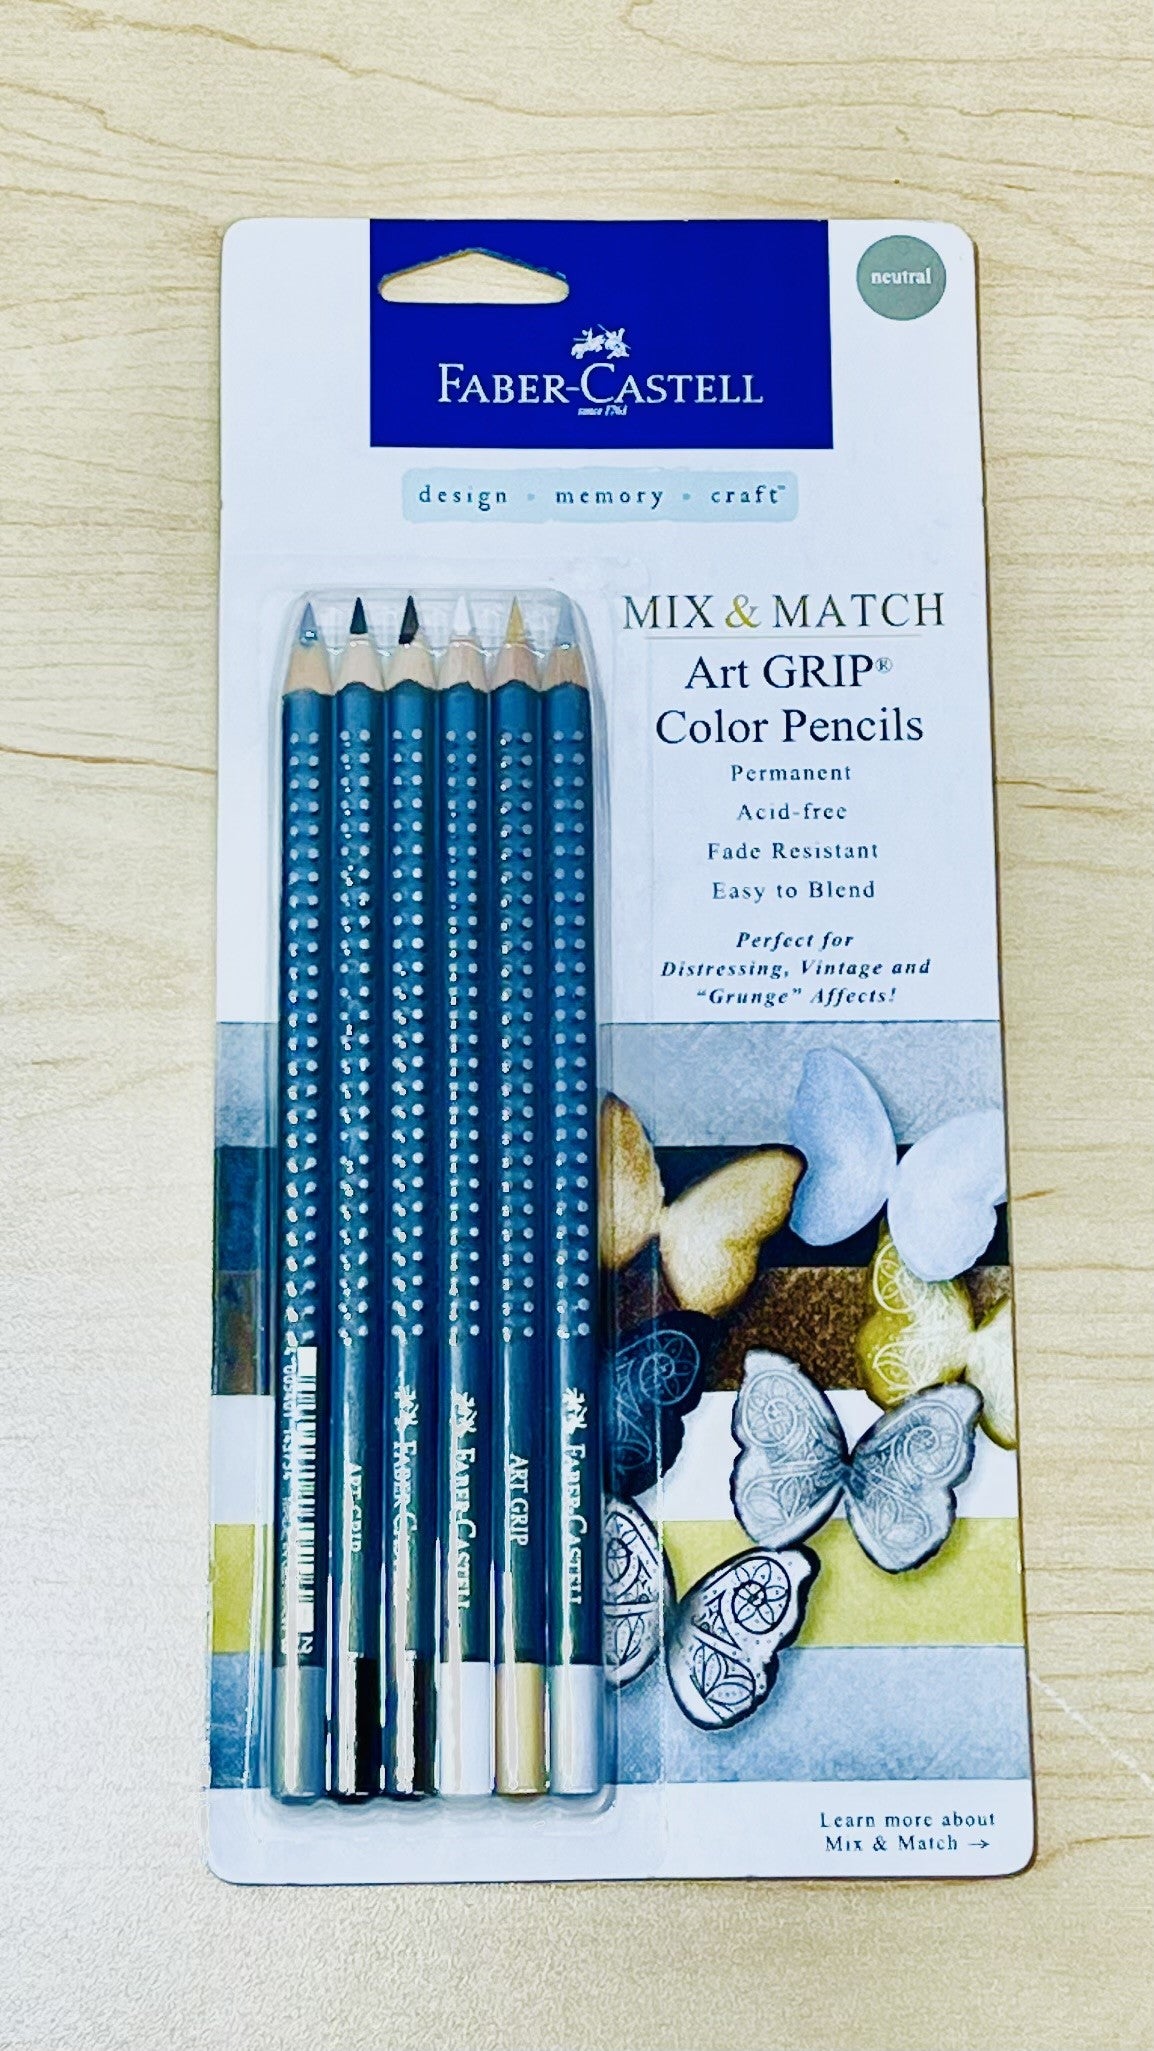 Faber-Castell Mix & Match Art Grip Color Pencils - Neutral - Blesket Canada